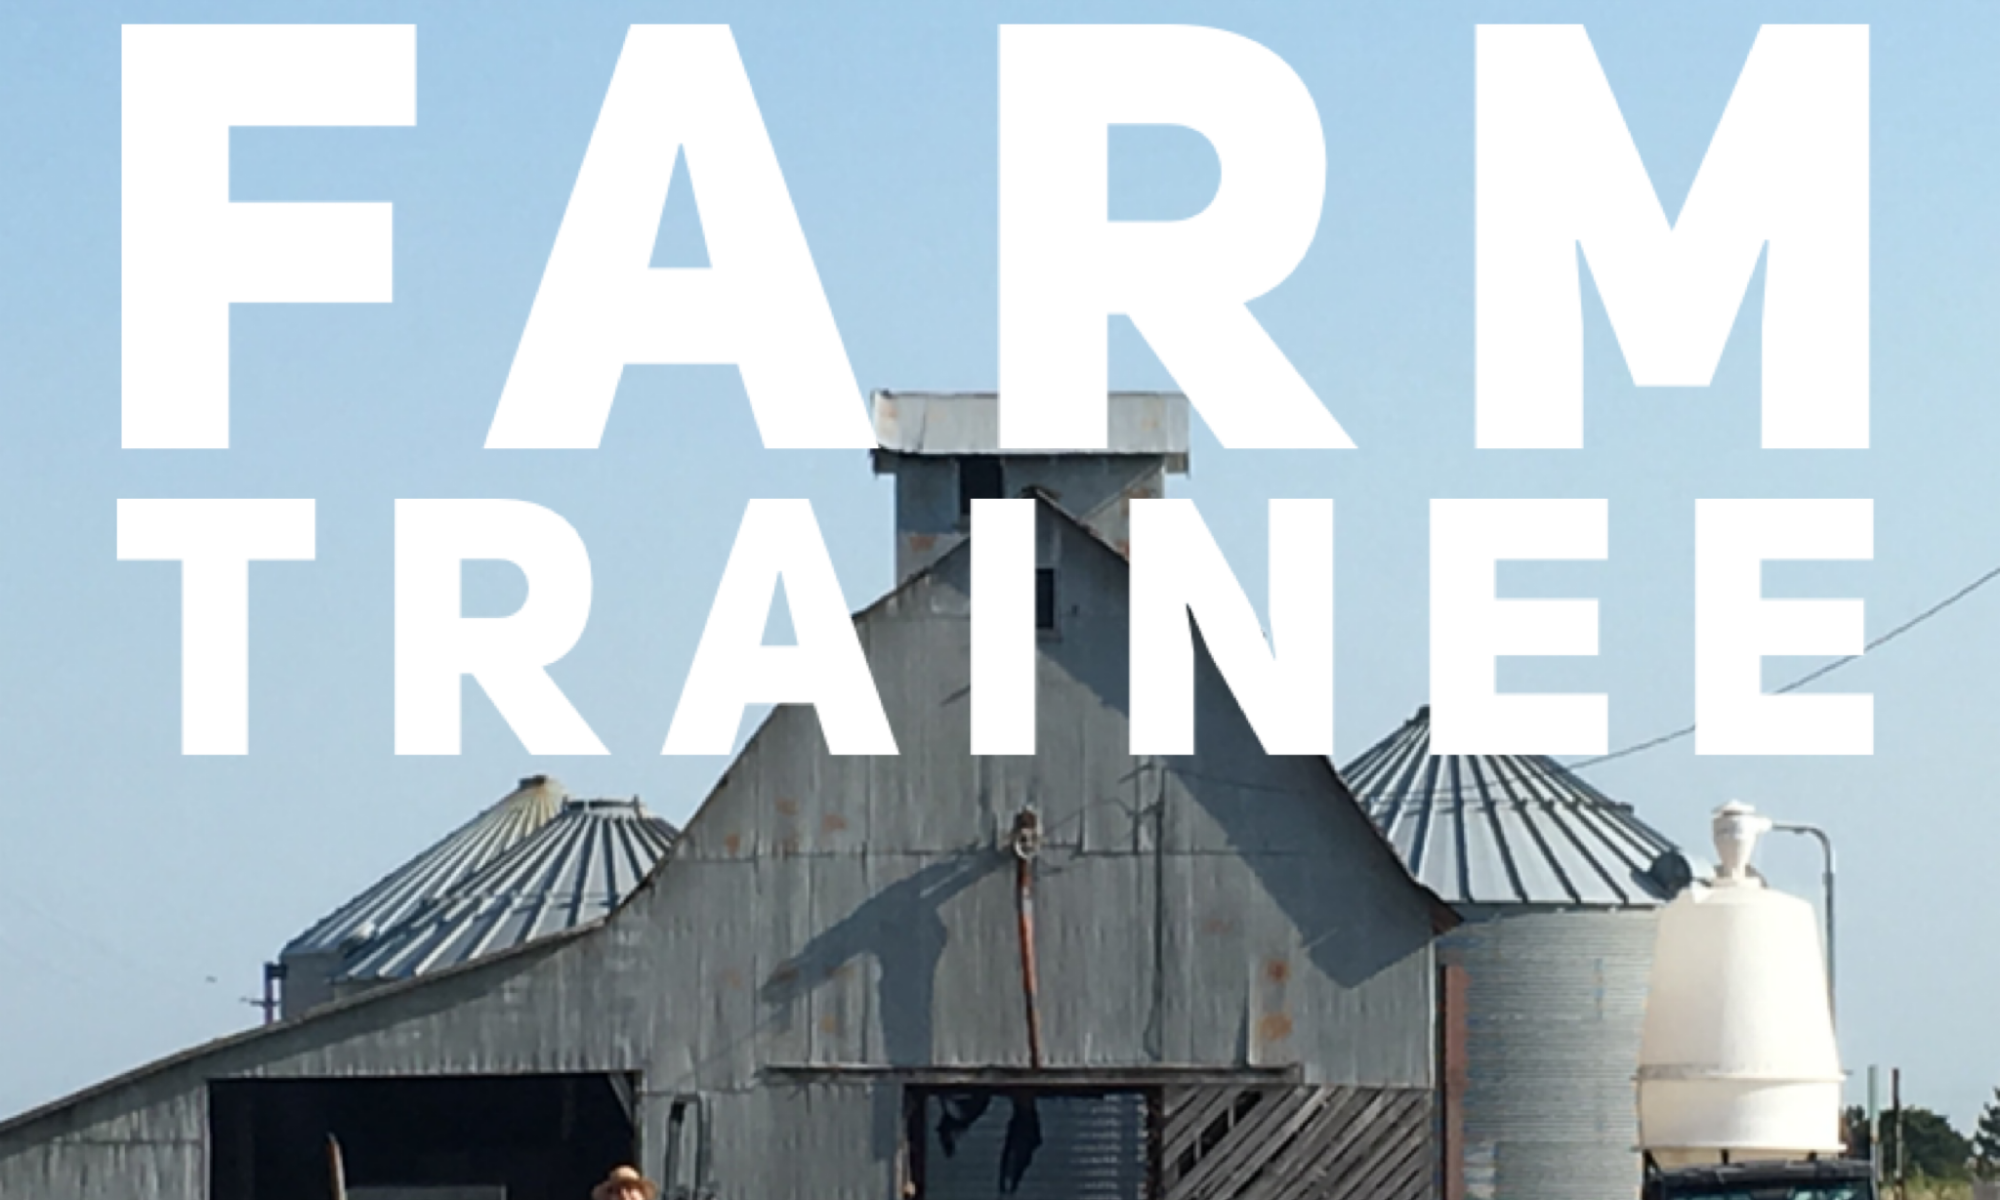 Job Opening: Farm Trainee